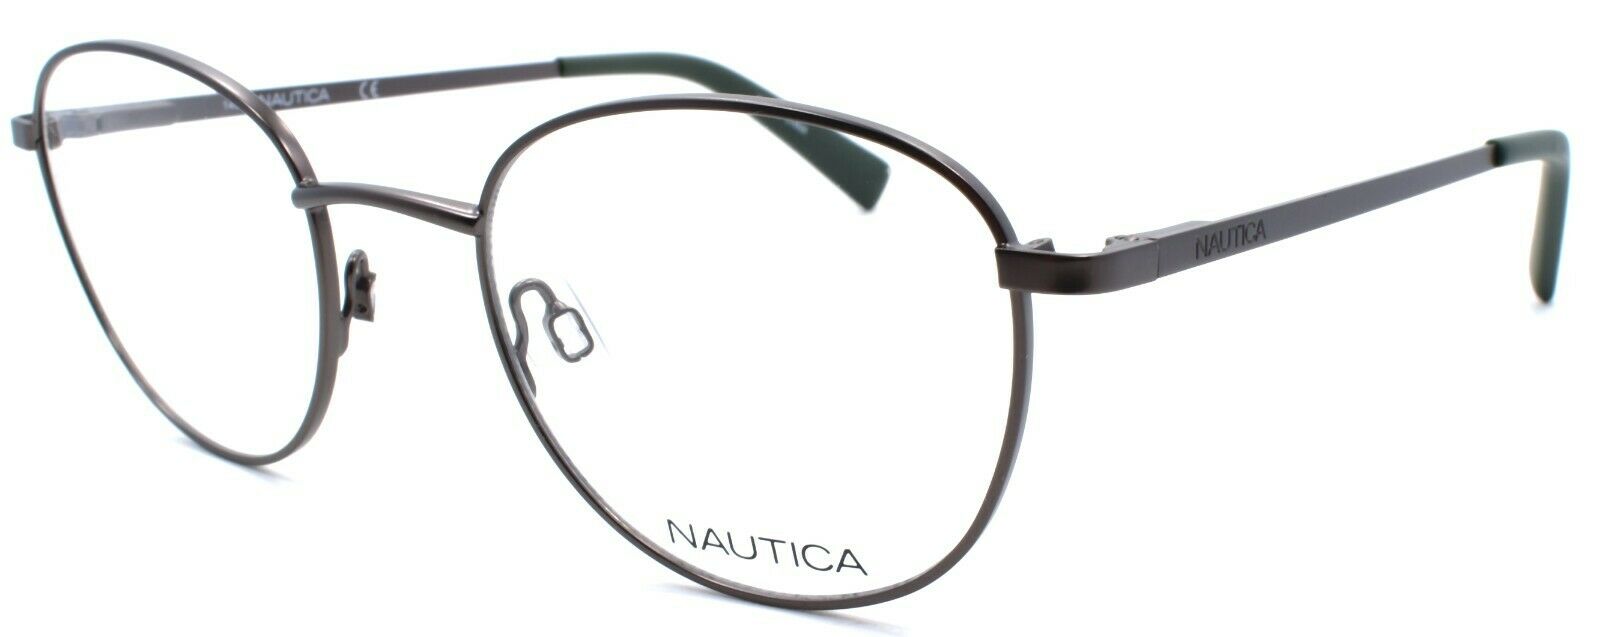 1-Nautica N7303 030 Men's Eyeglasses Frames 49-21-140 Satin Gunmetal-688940463125-IKSpecs